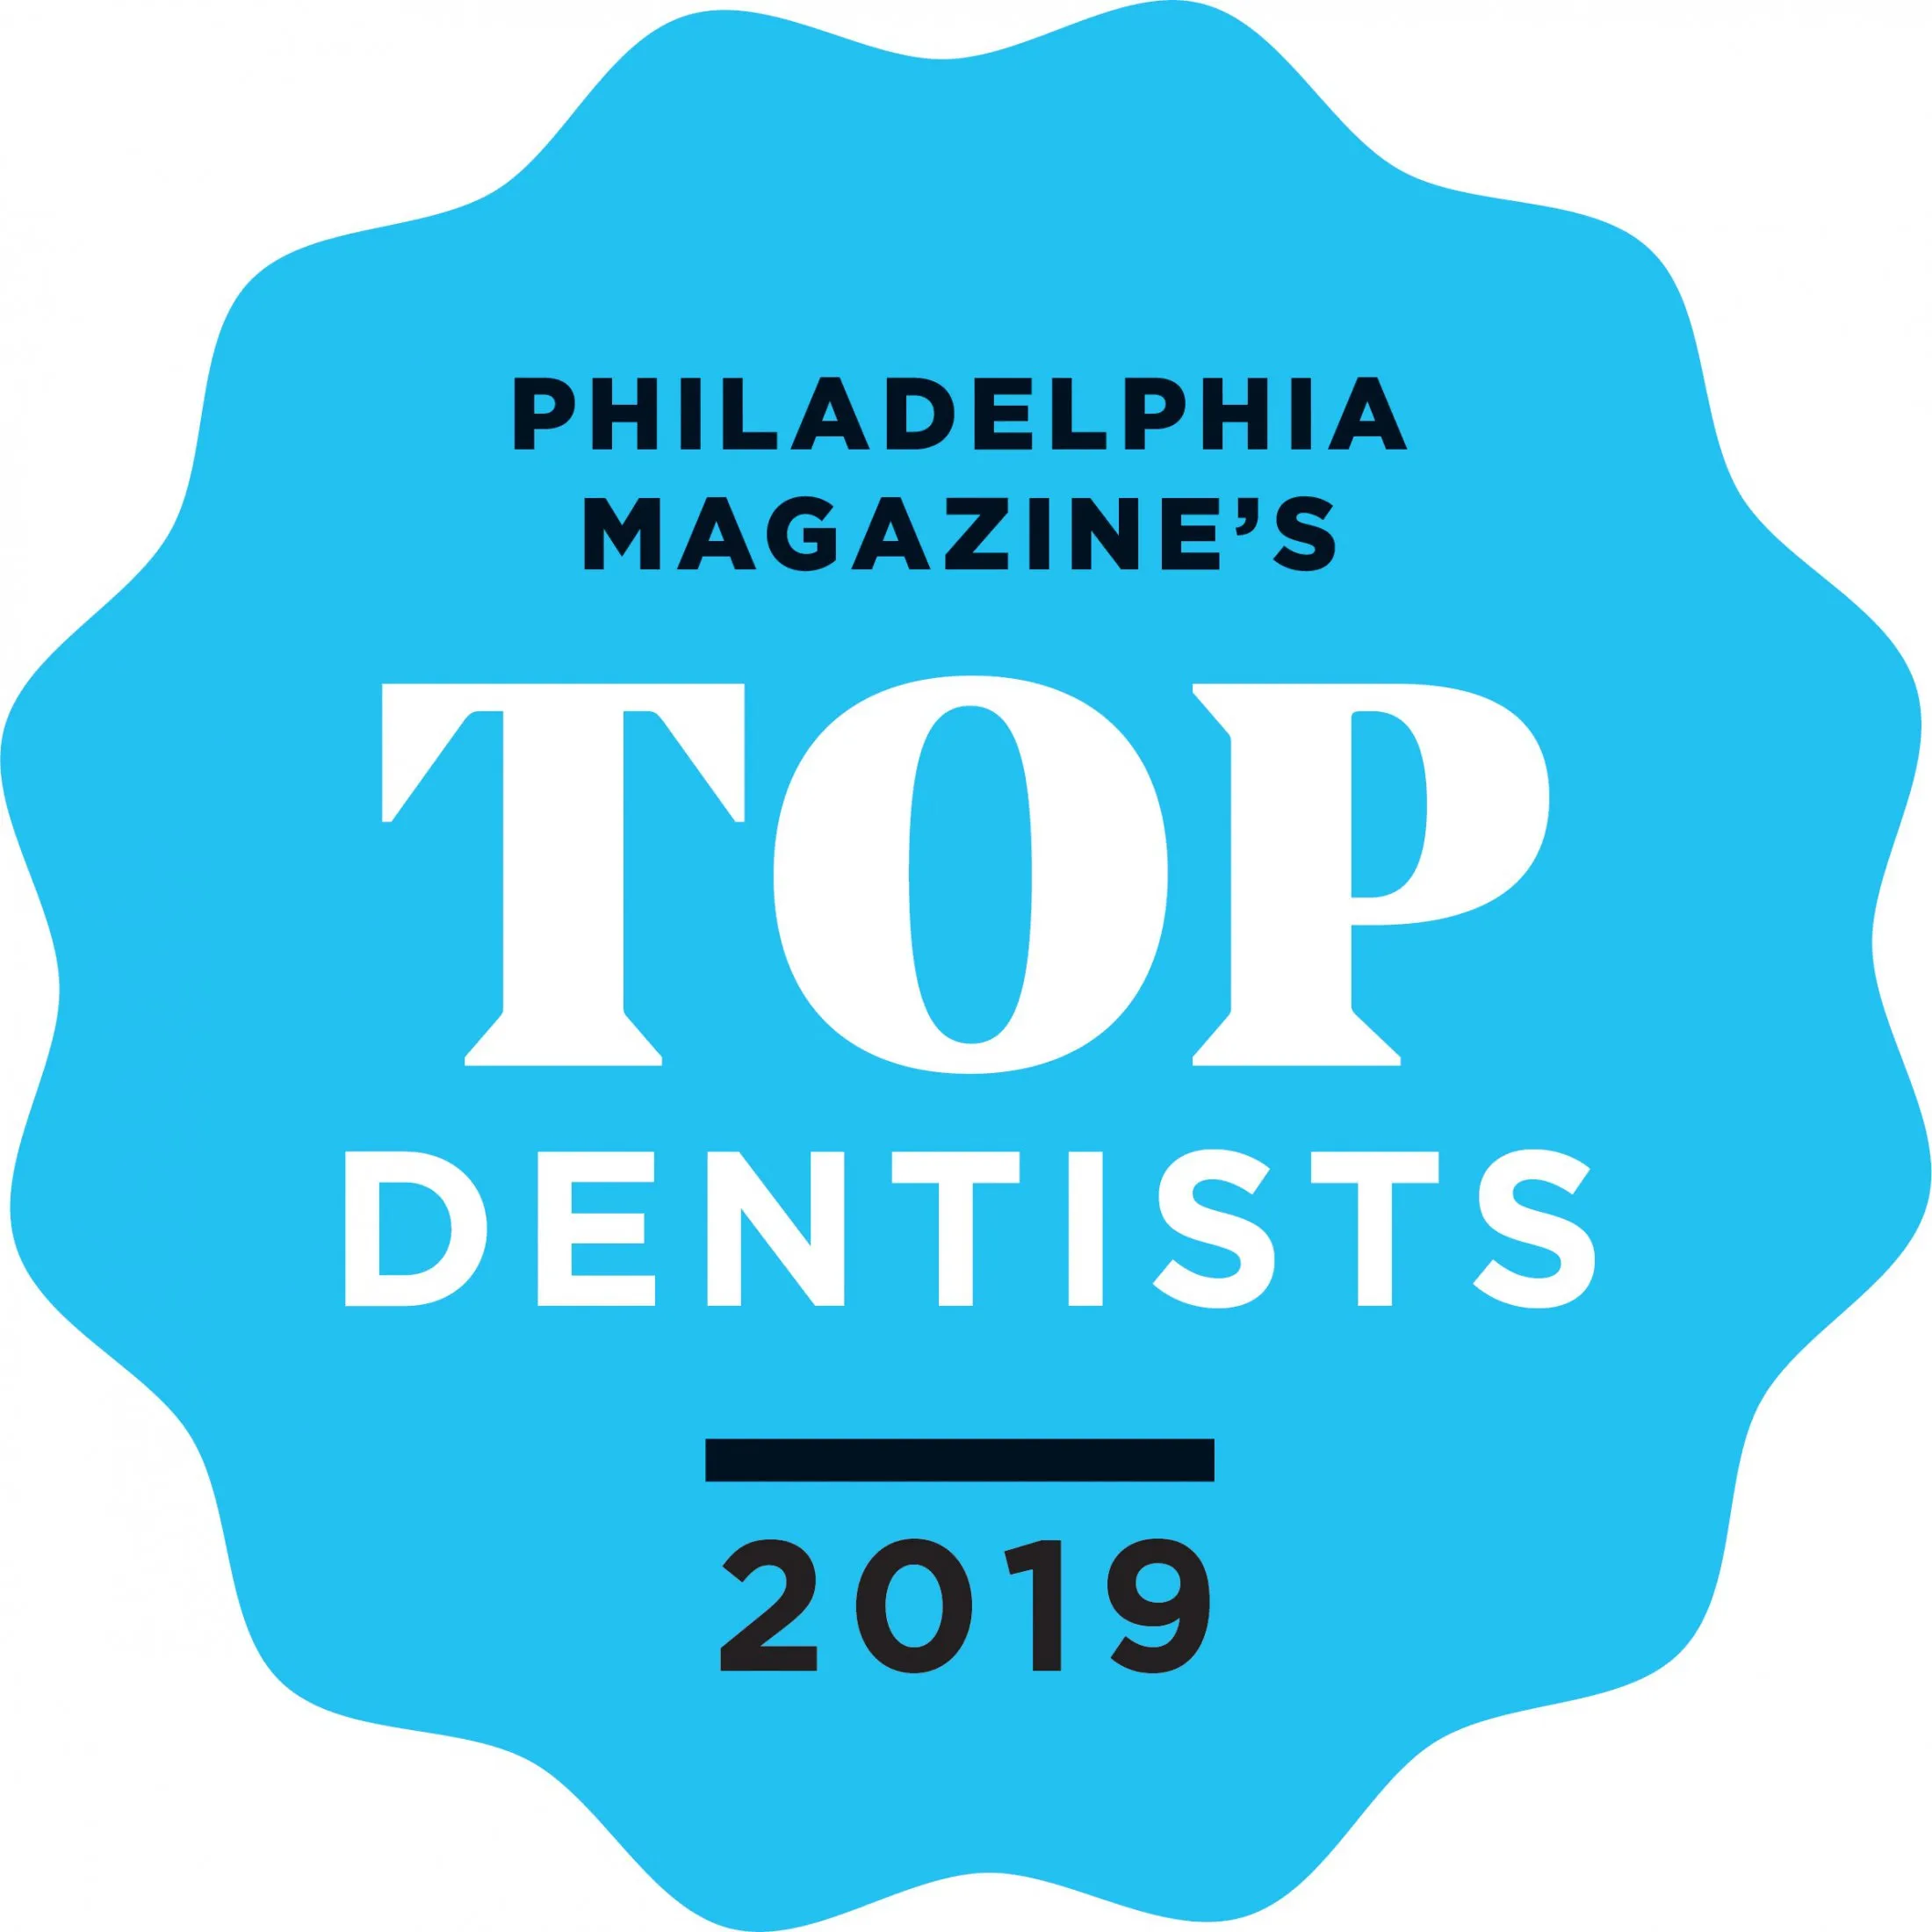 Logo for top dentists 2019 chosen by Philadelphia magazine